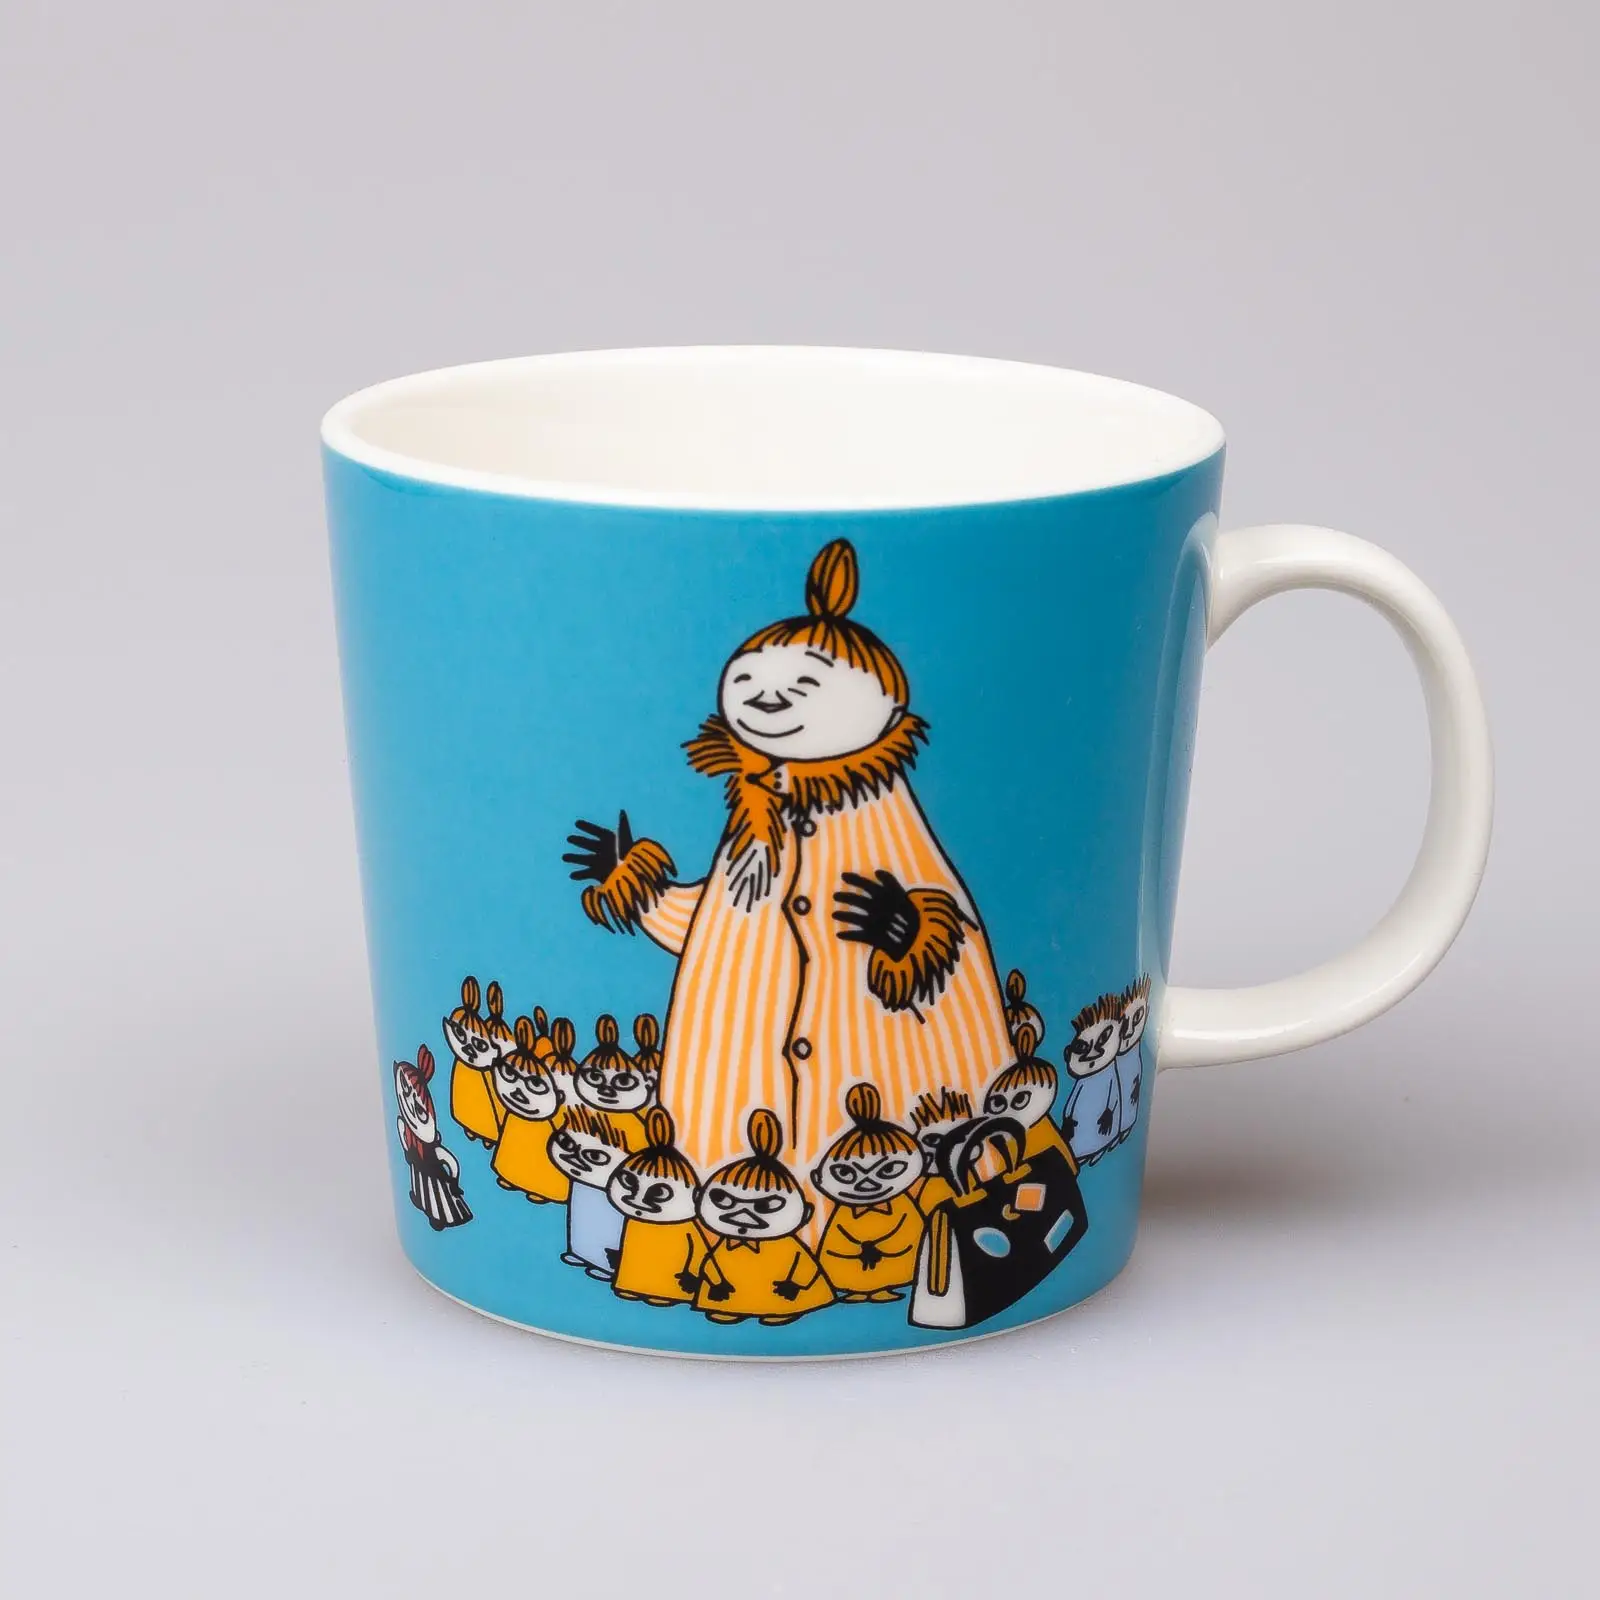 Moomin mug – Mymble’s Mother – (2012 – )